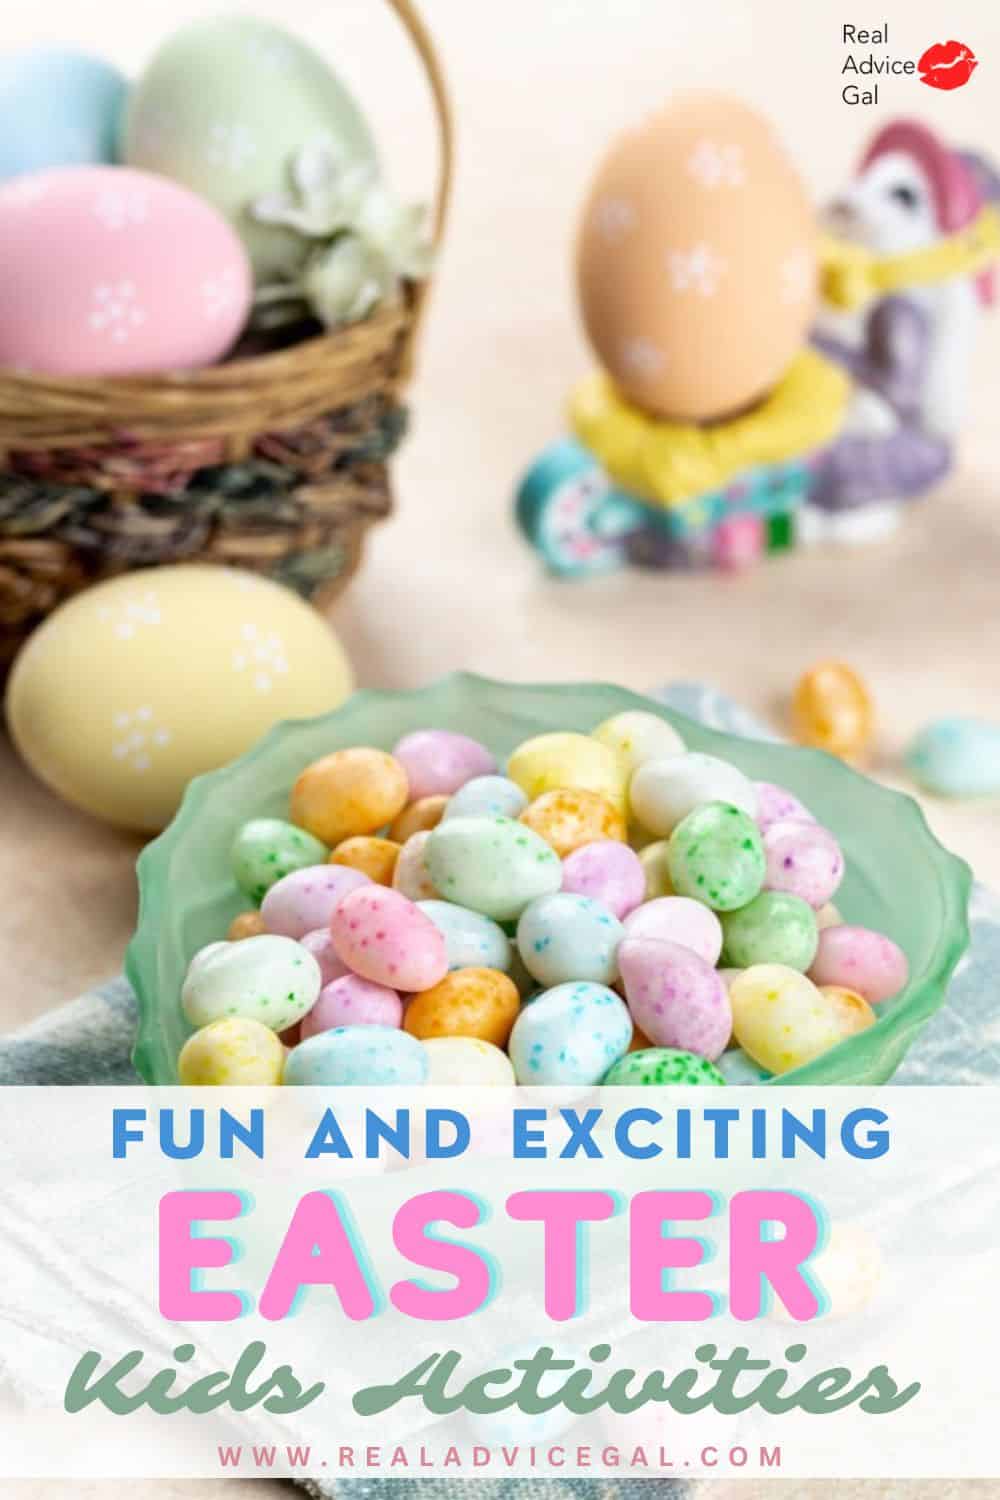 Fun Easter activities for kids